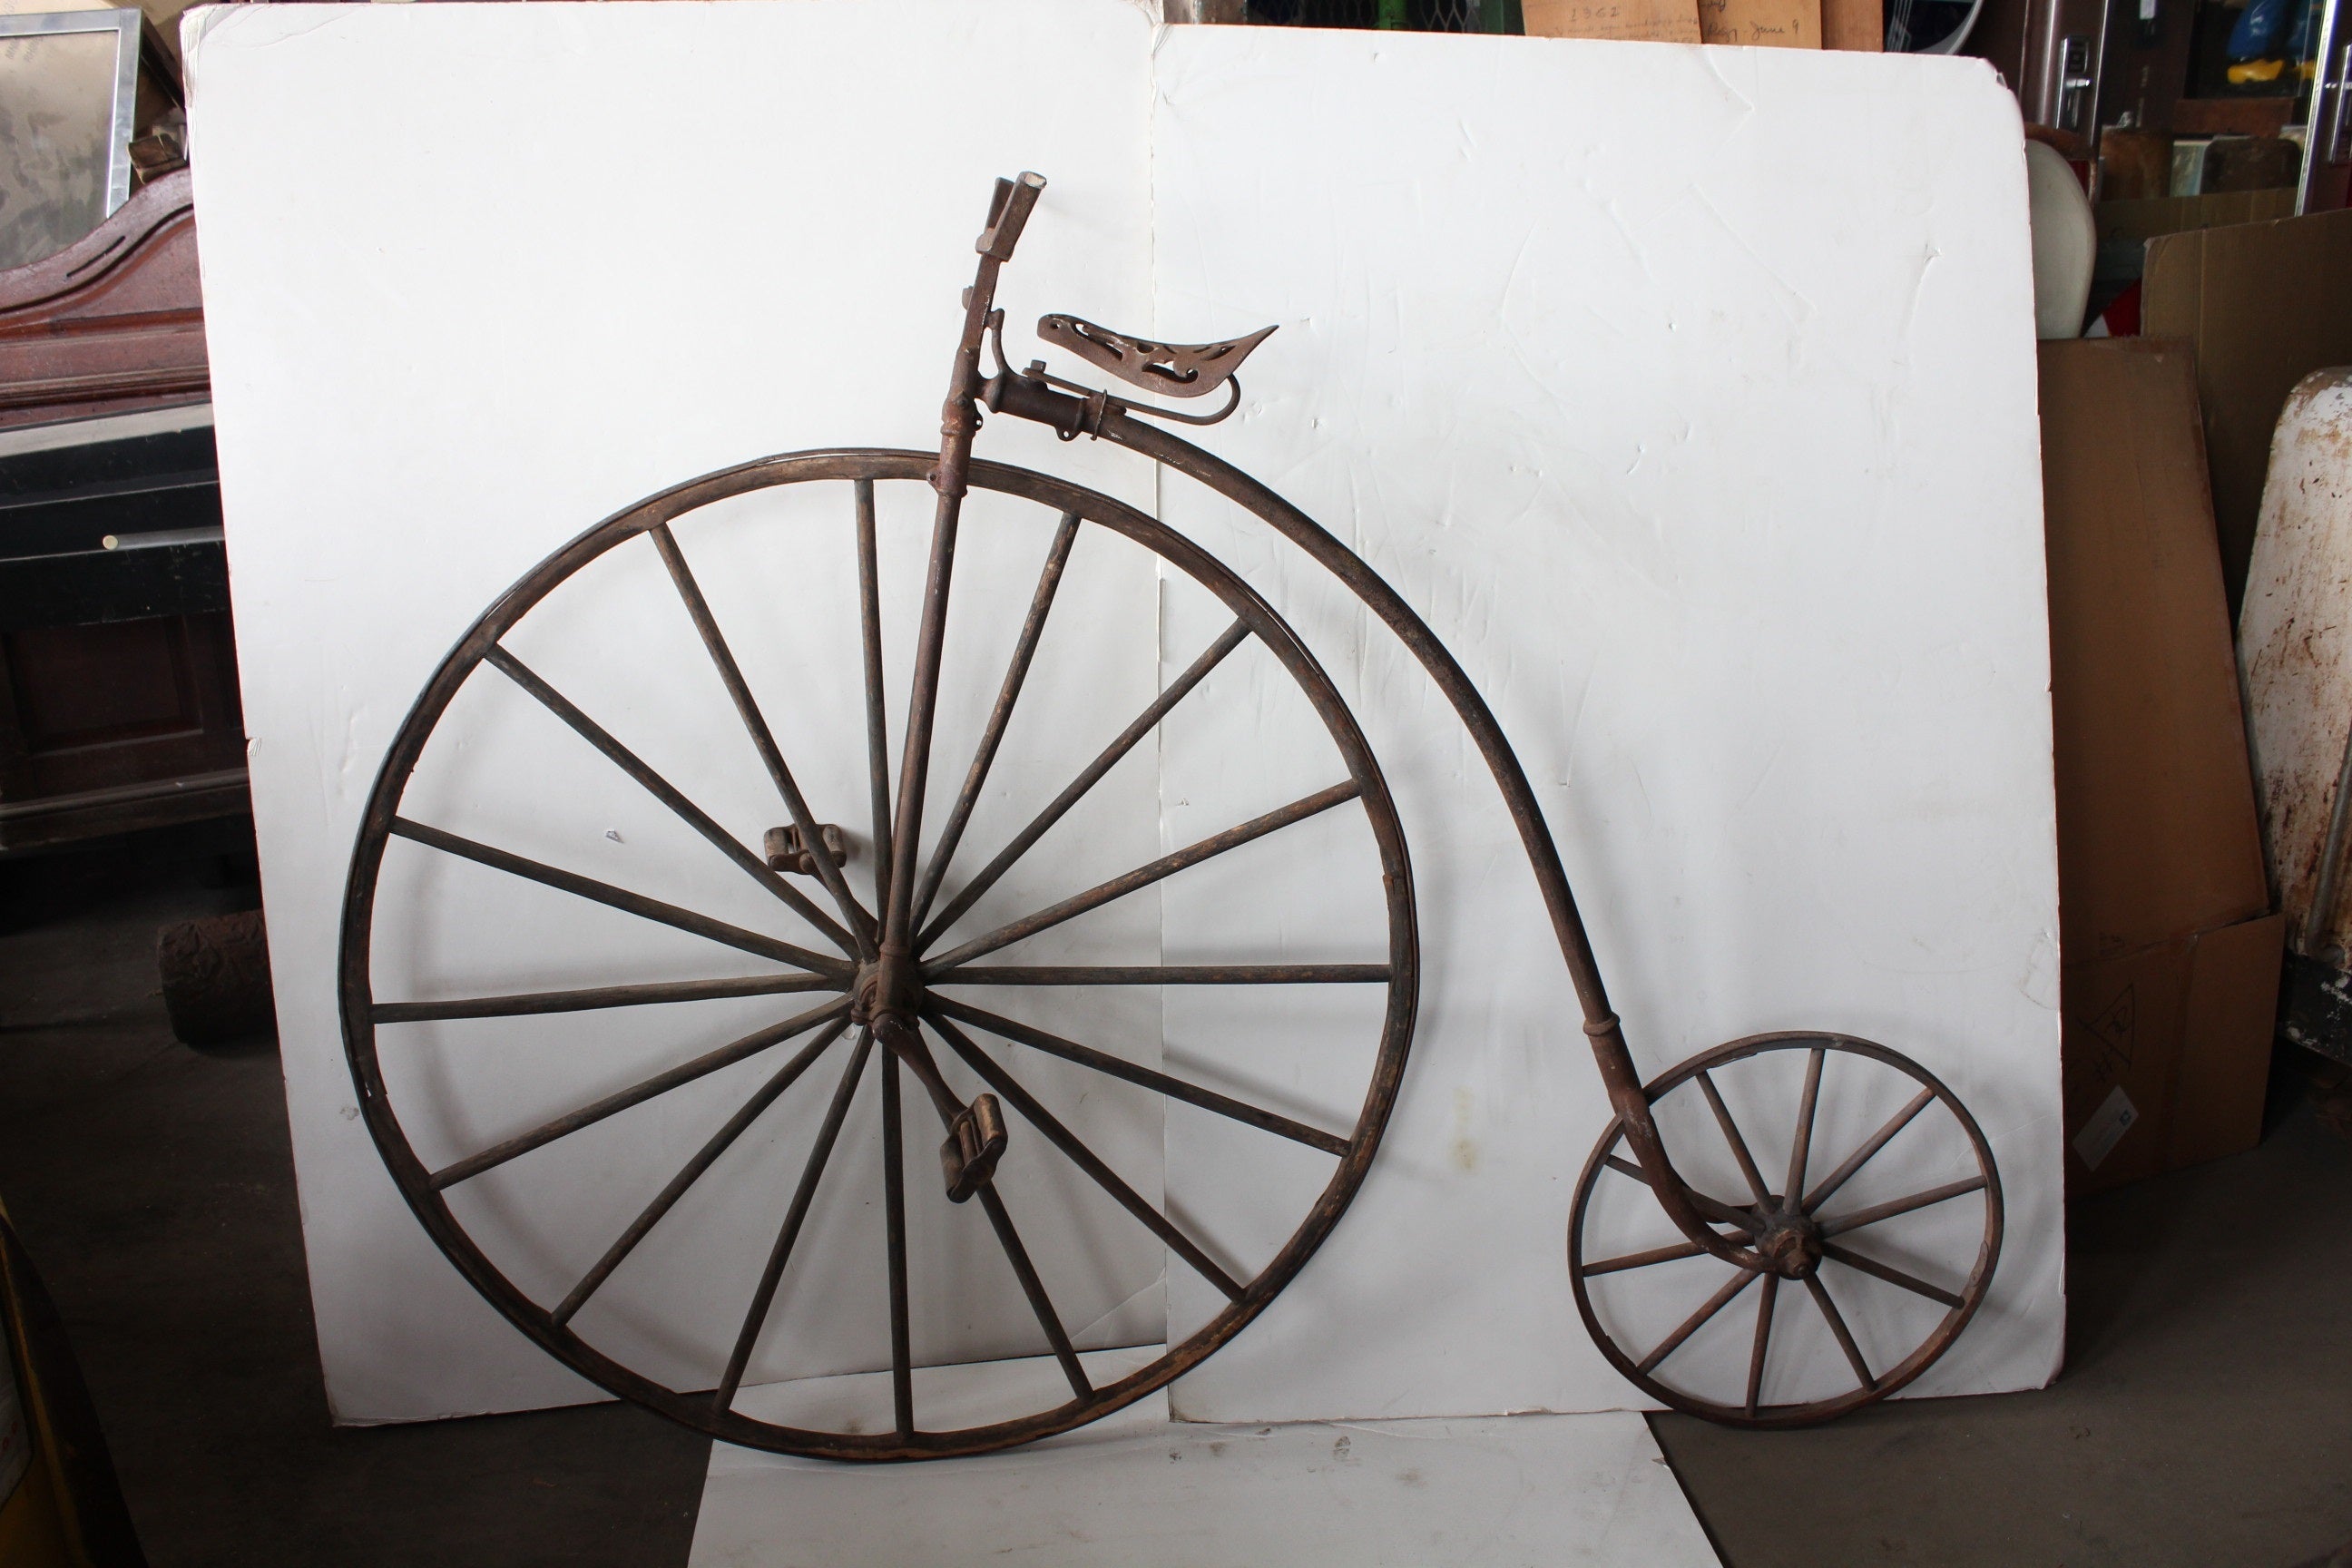 Late 1800's American High Wheeler Bicycle